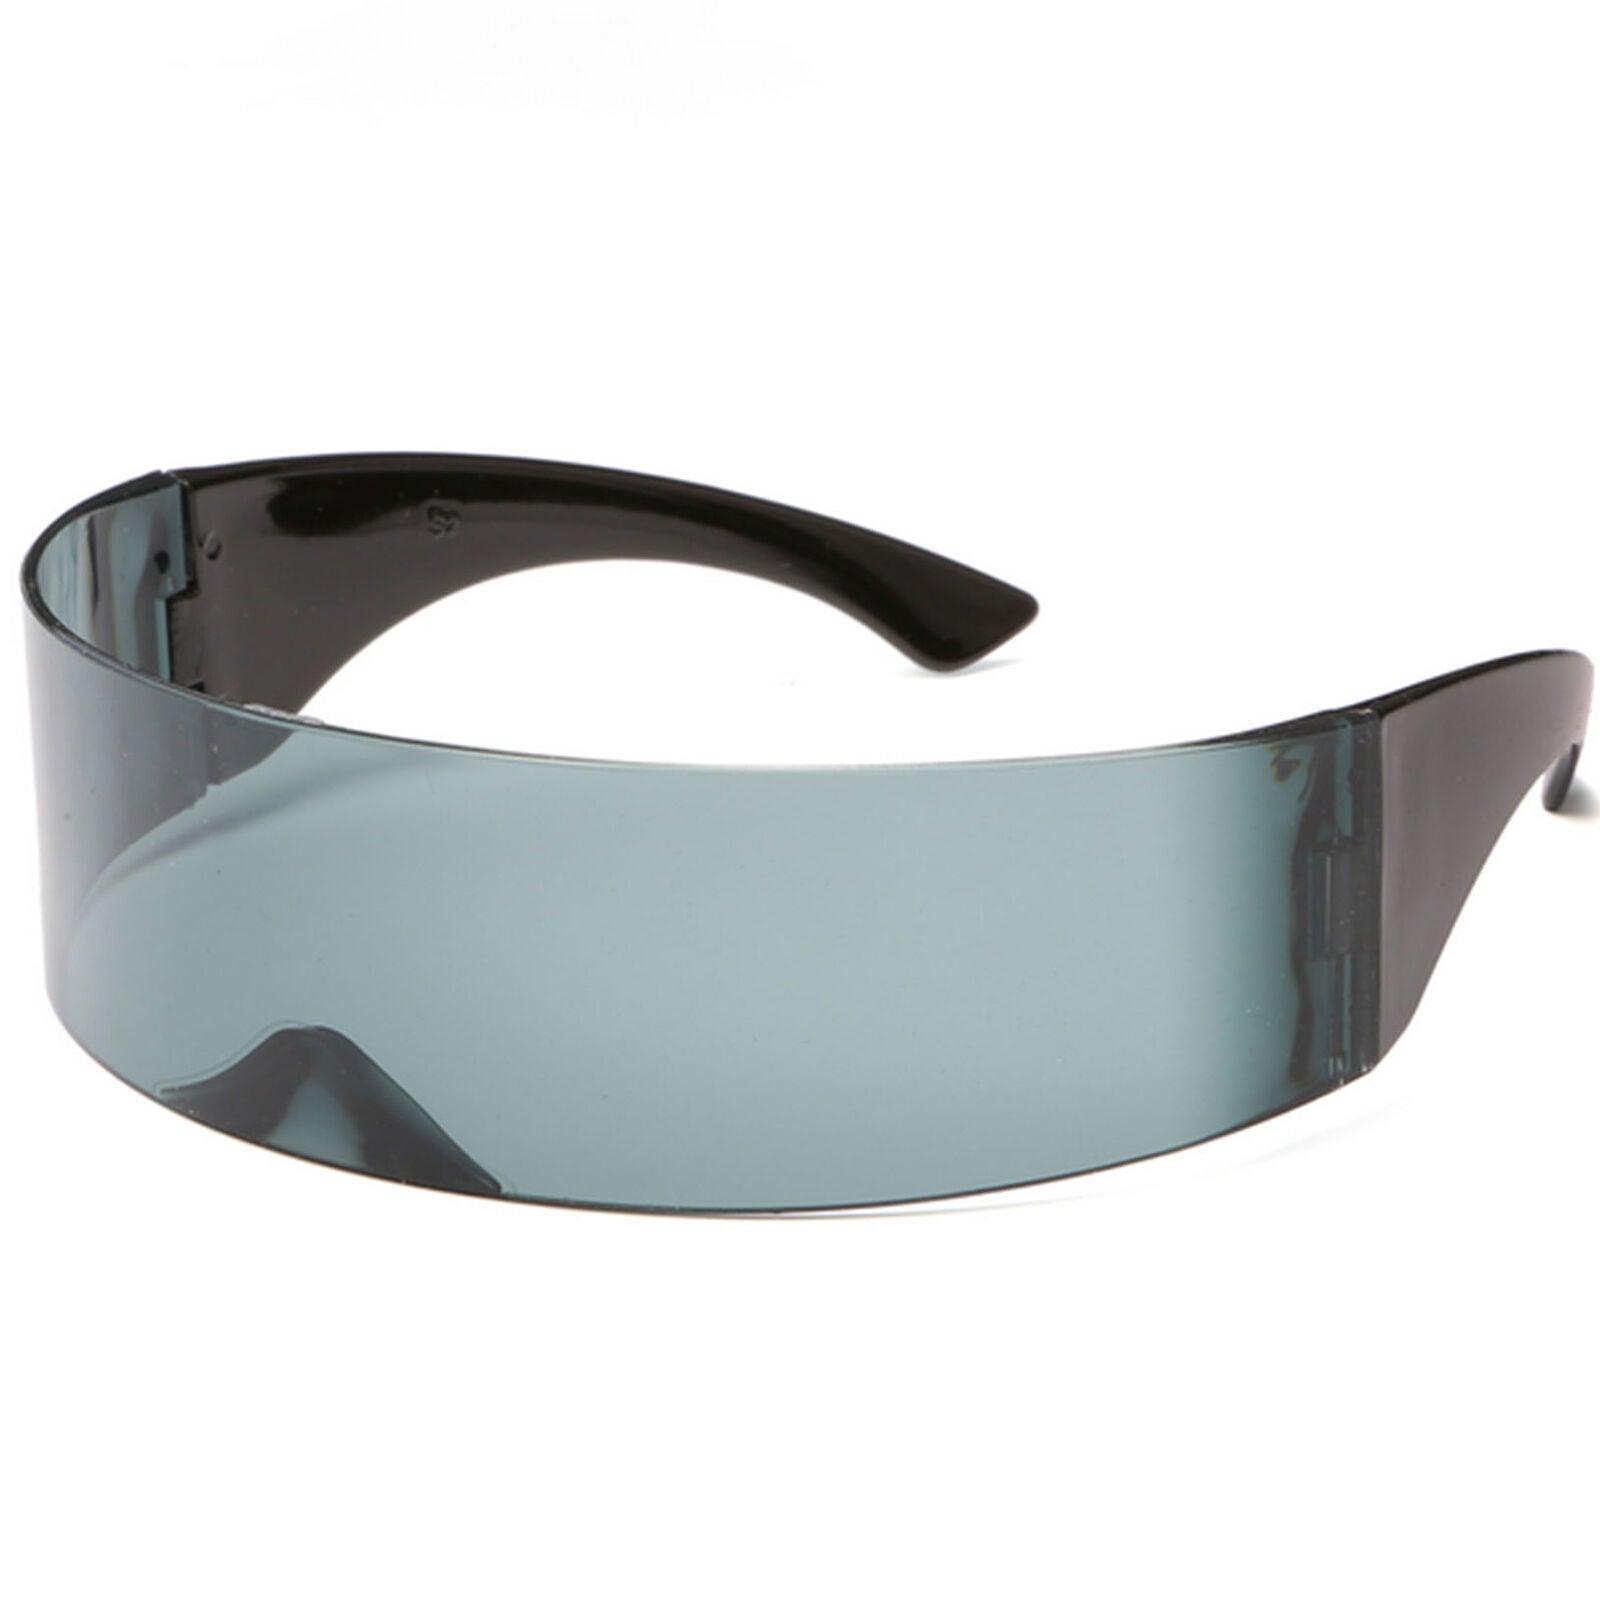 Futuristic Sunglasses Narrow Lens Mirrored Wrap Visor Robot Costume Flat Glasses